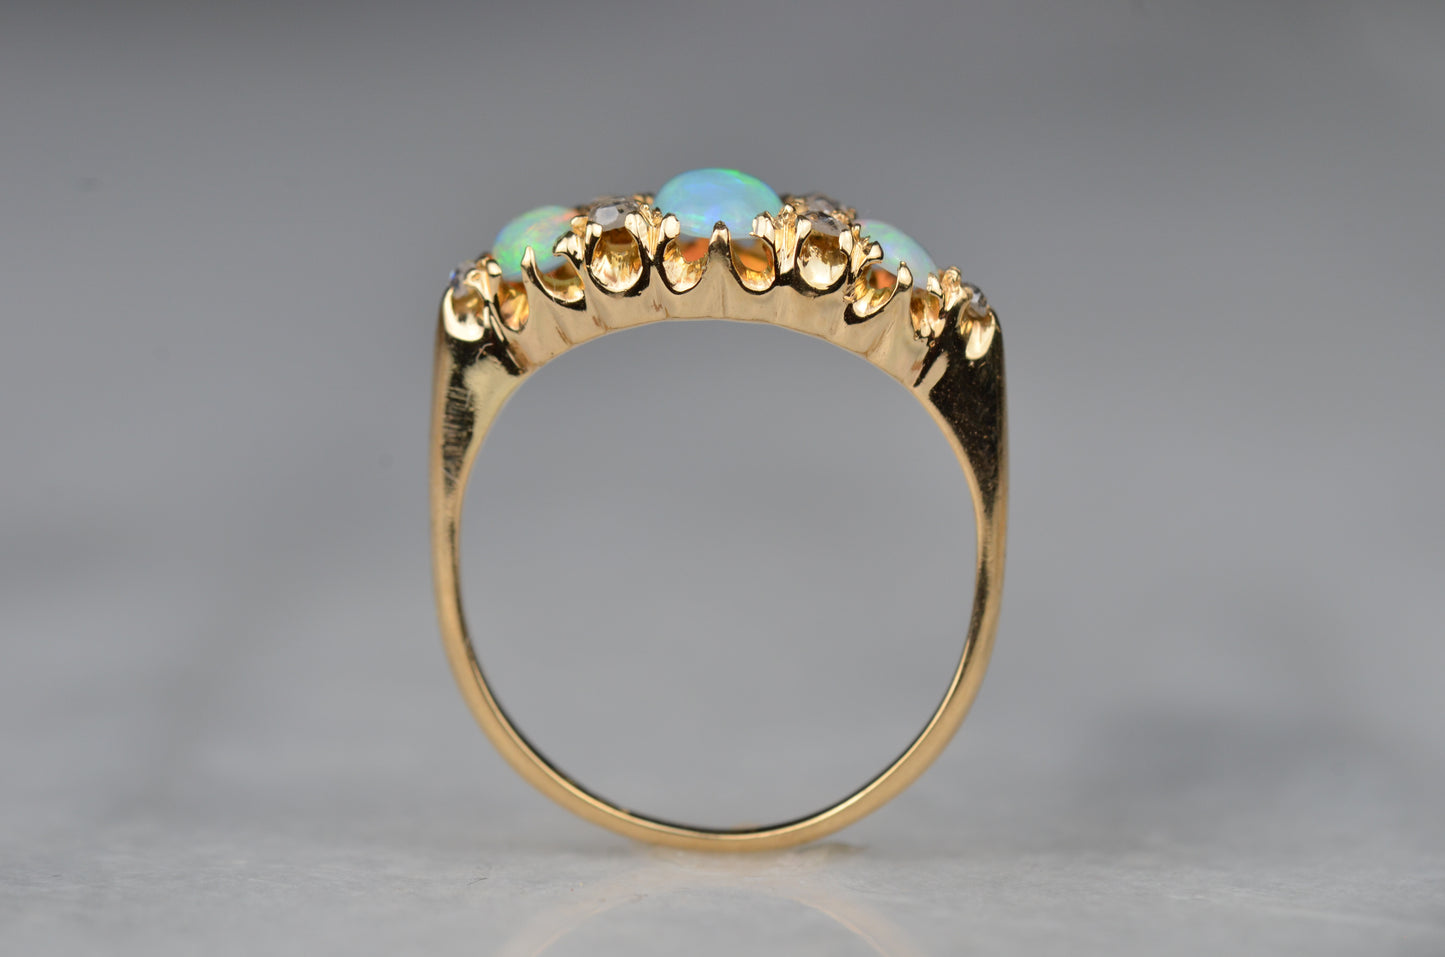 Phenomenal Antique Opal and Diamond Ring